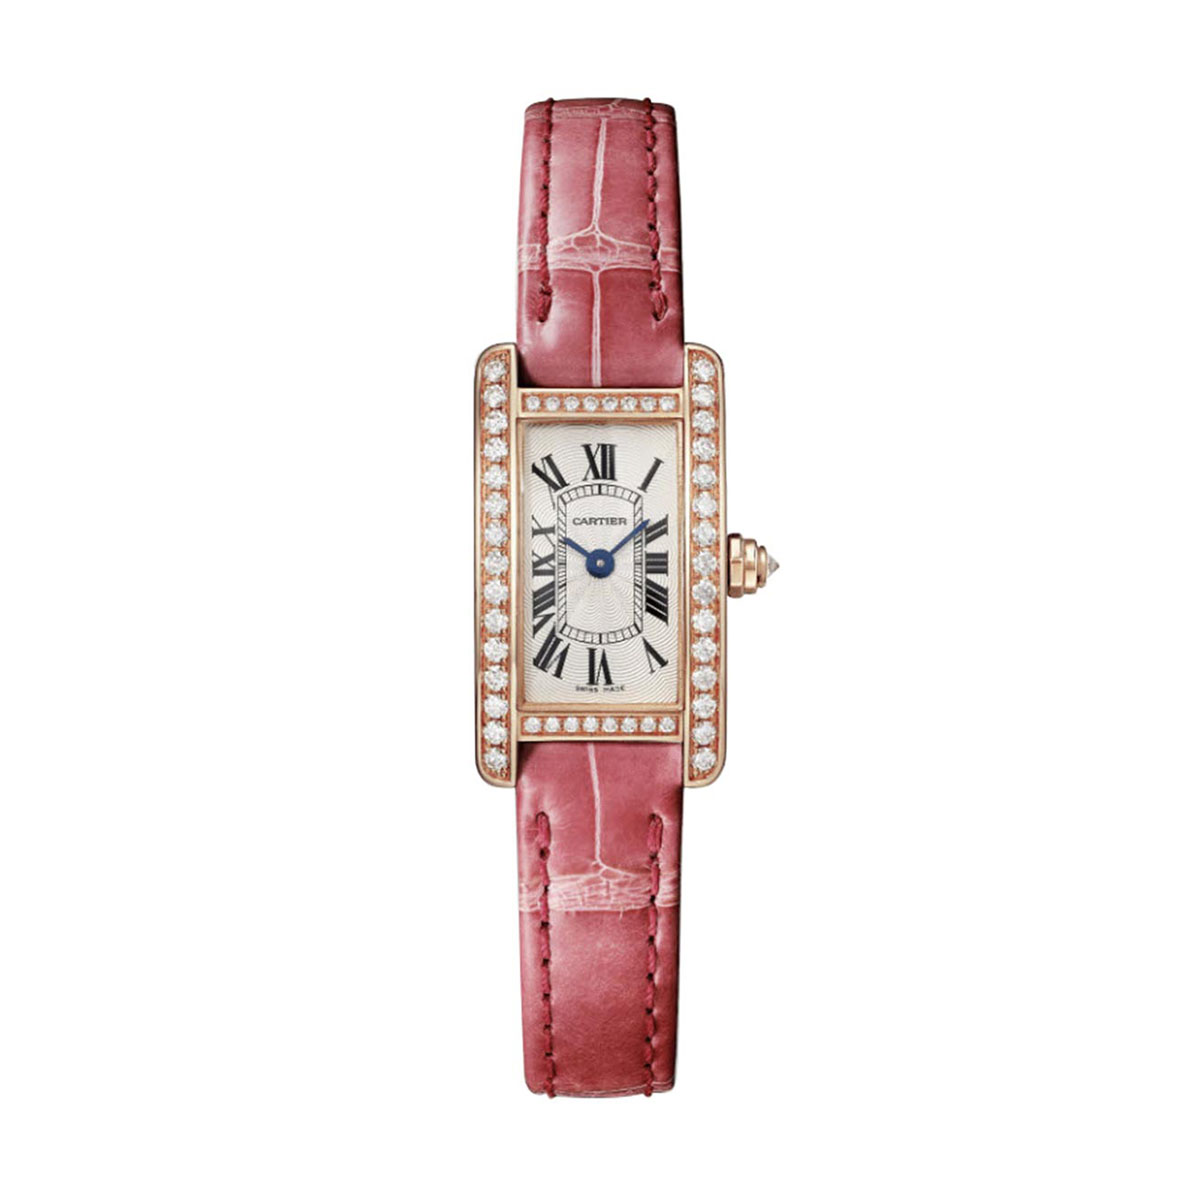 Cartier Tank Louis 6711 Diamond Bezel Ladies Watch